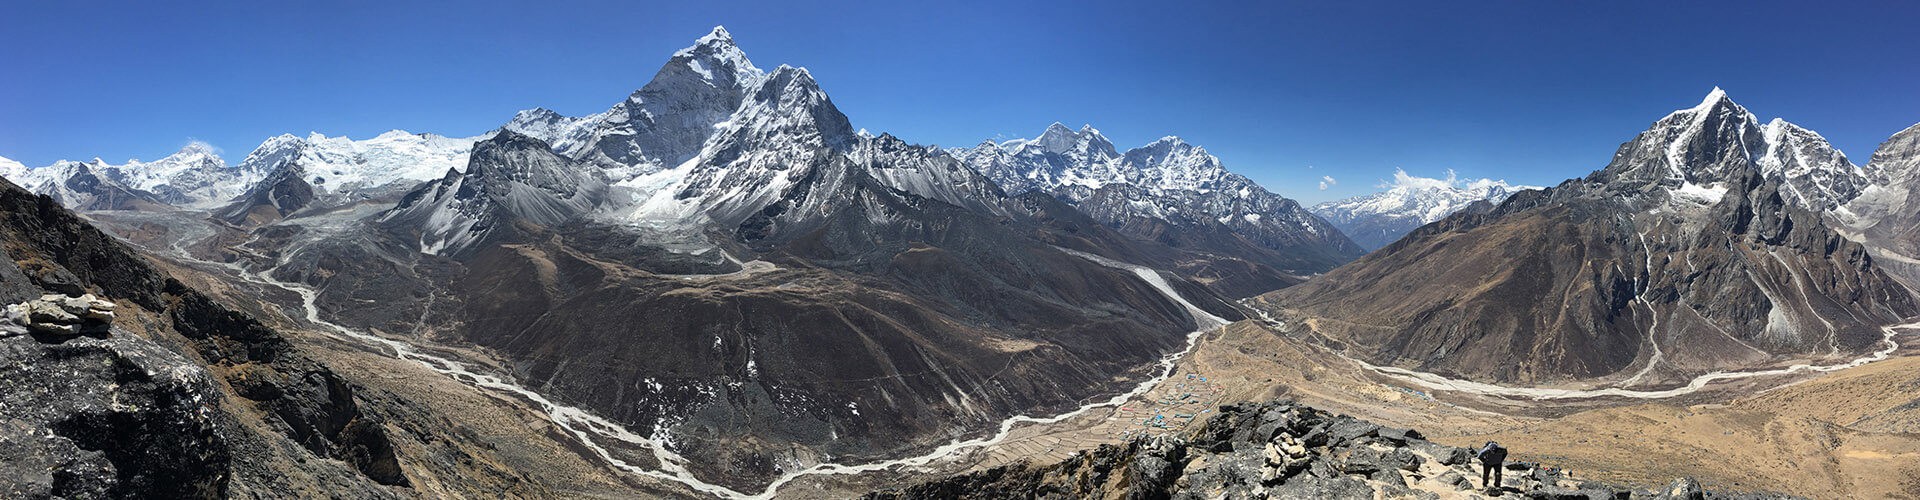 Nepal Trek booking